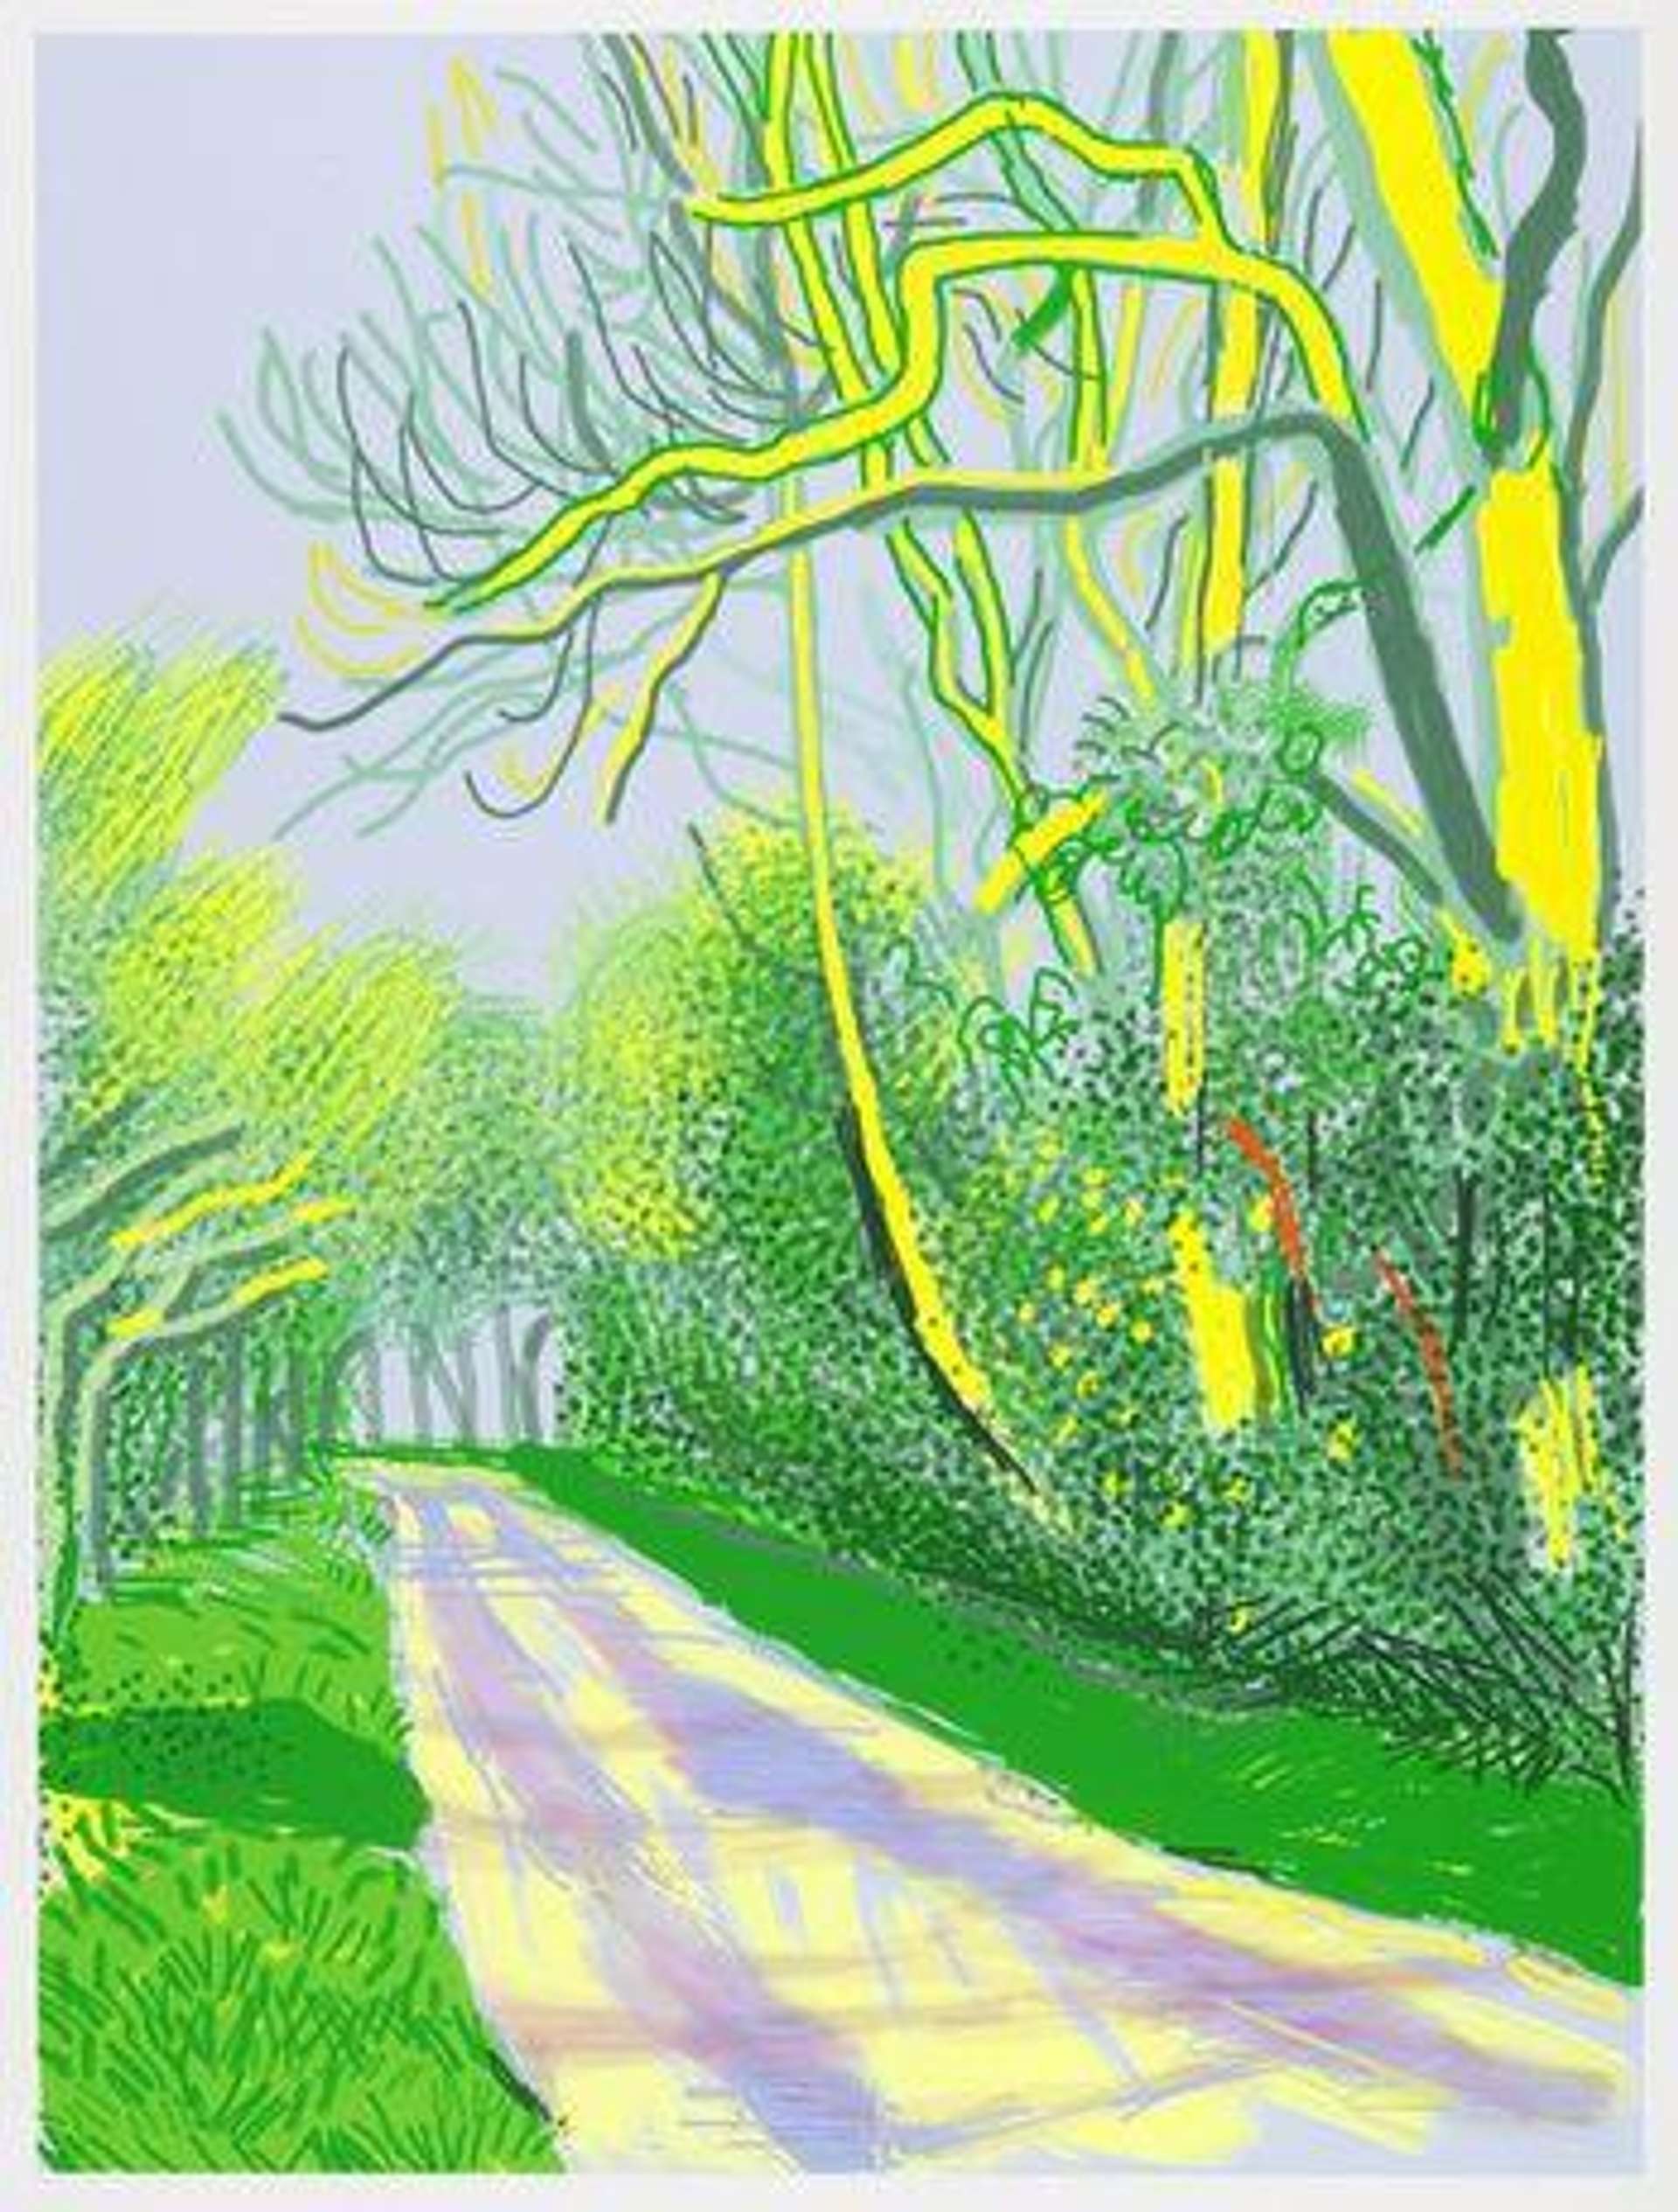 The Arrival Of Spring In Woldgate East Yorkshire 12th April 2011 - No. 2 - Signed Print by David Hockney 2011 - MyArtBroker